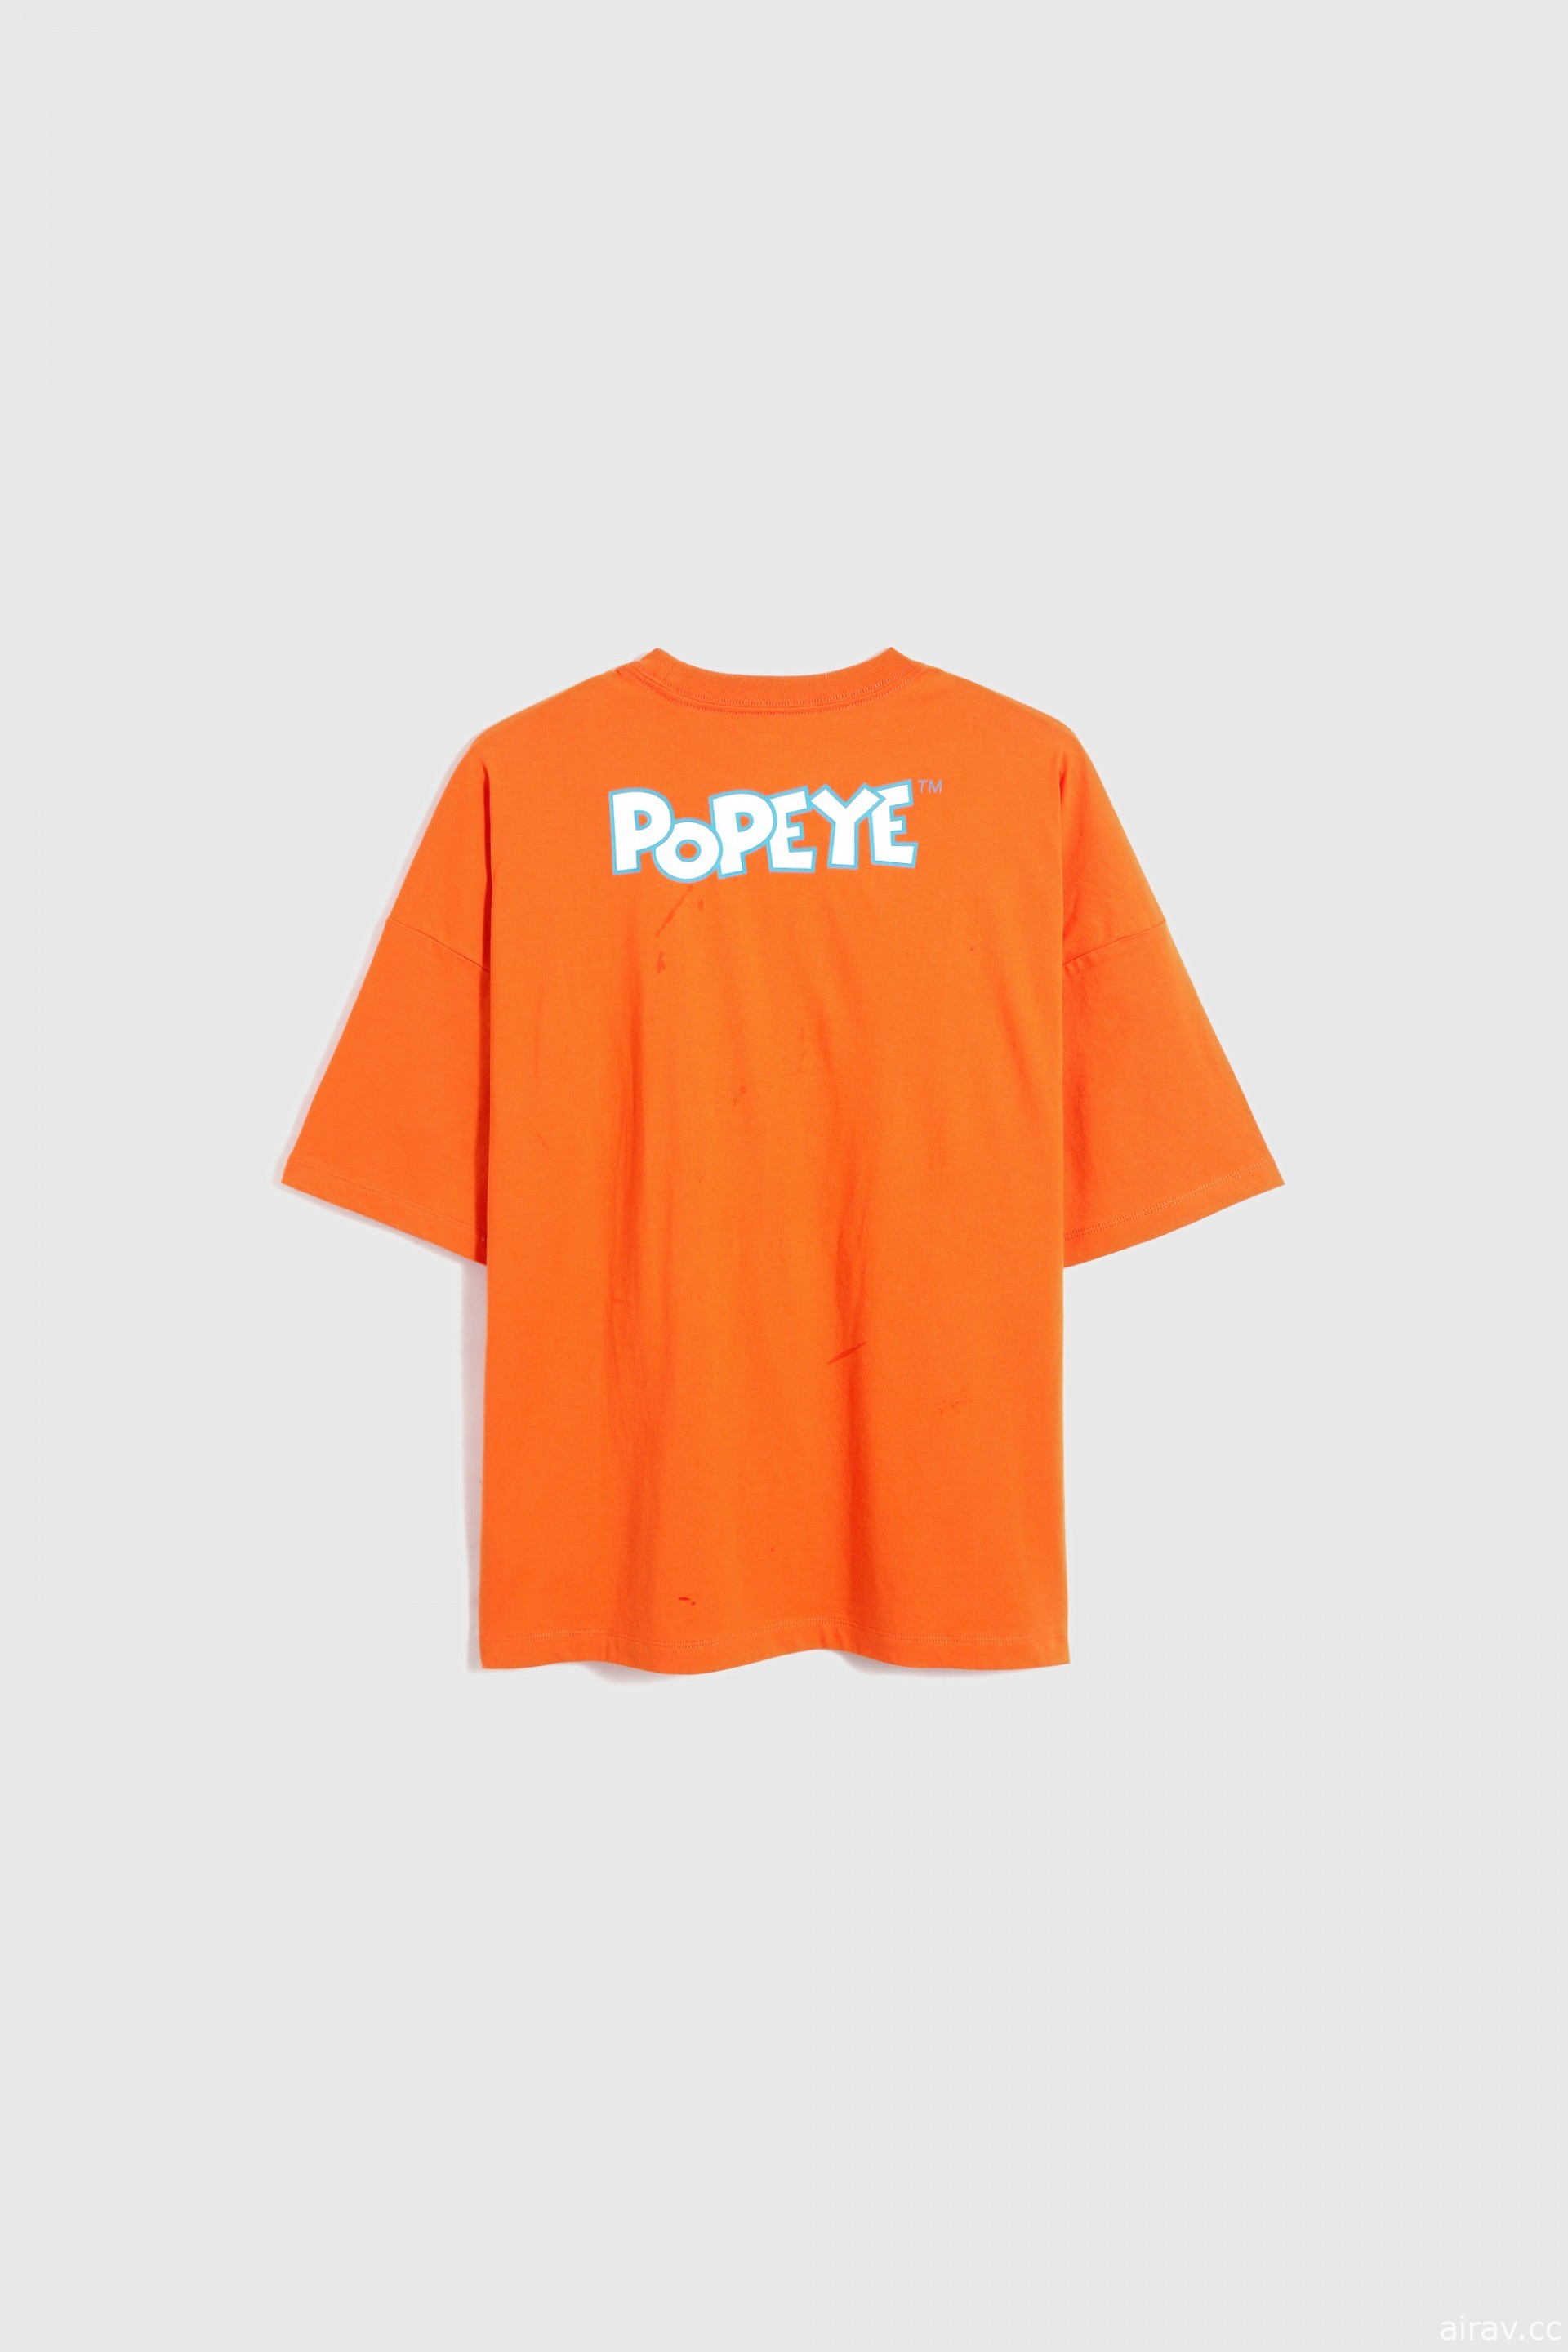 「GAP X POPEYE」《大力水手卜派》聯名系列服飾登台 7 月 18 日起線上搶先販售